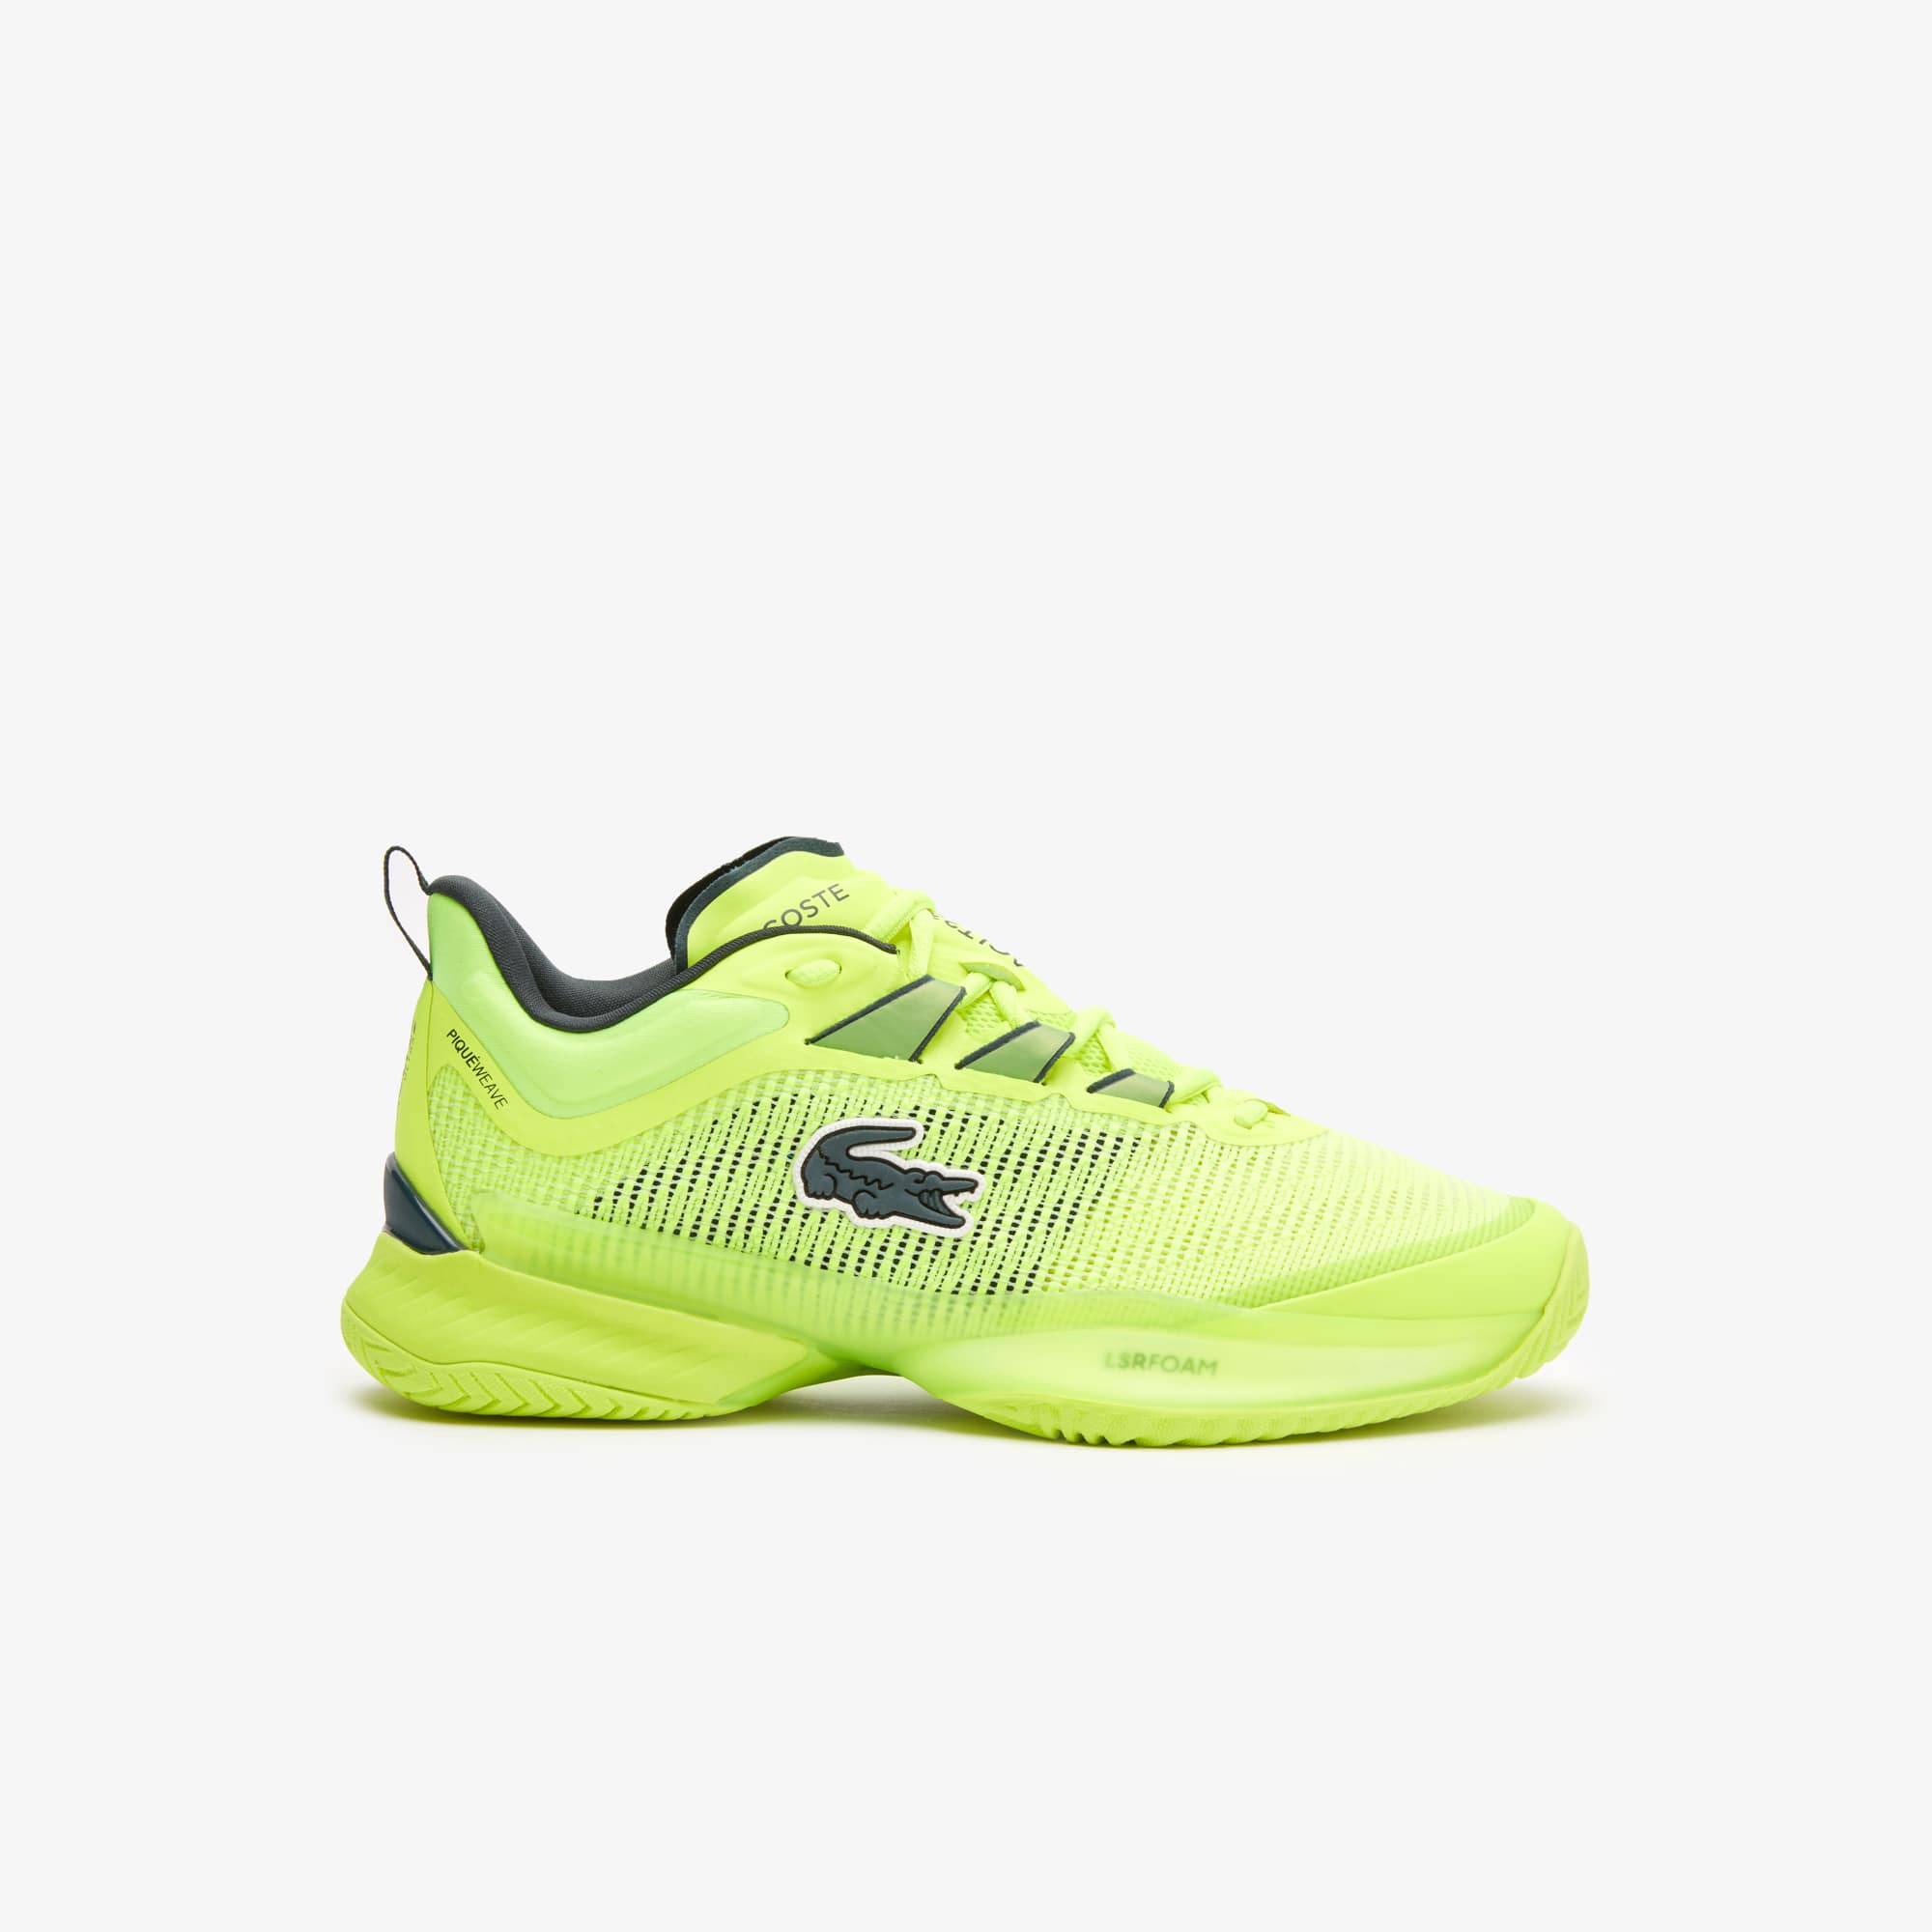 Lacoste Womens AG-LT23 Ultra Textile Tennis Shoes